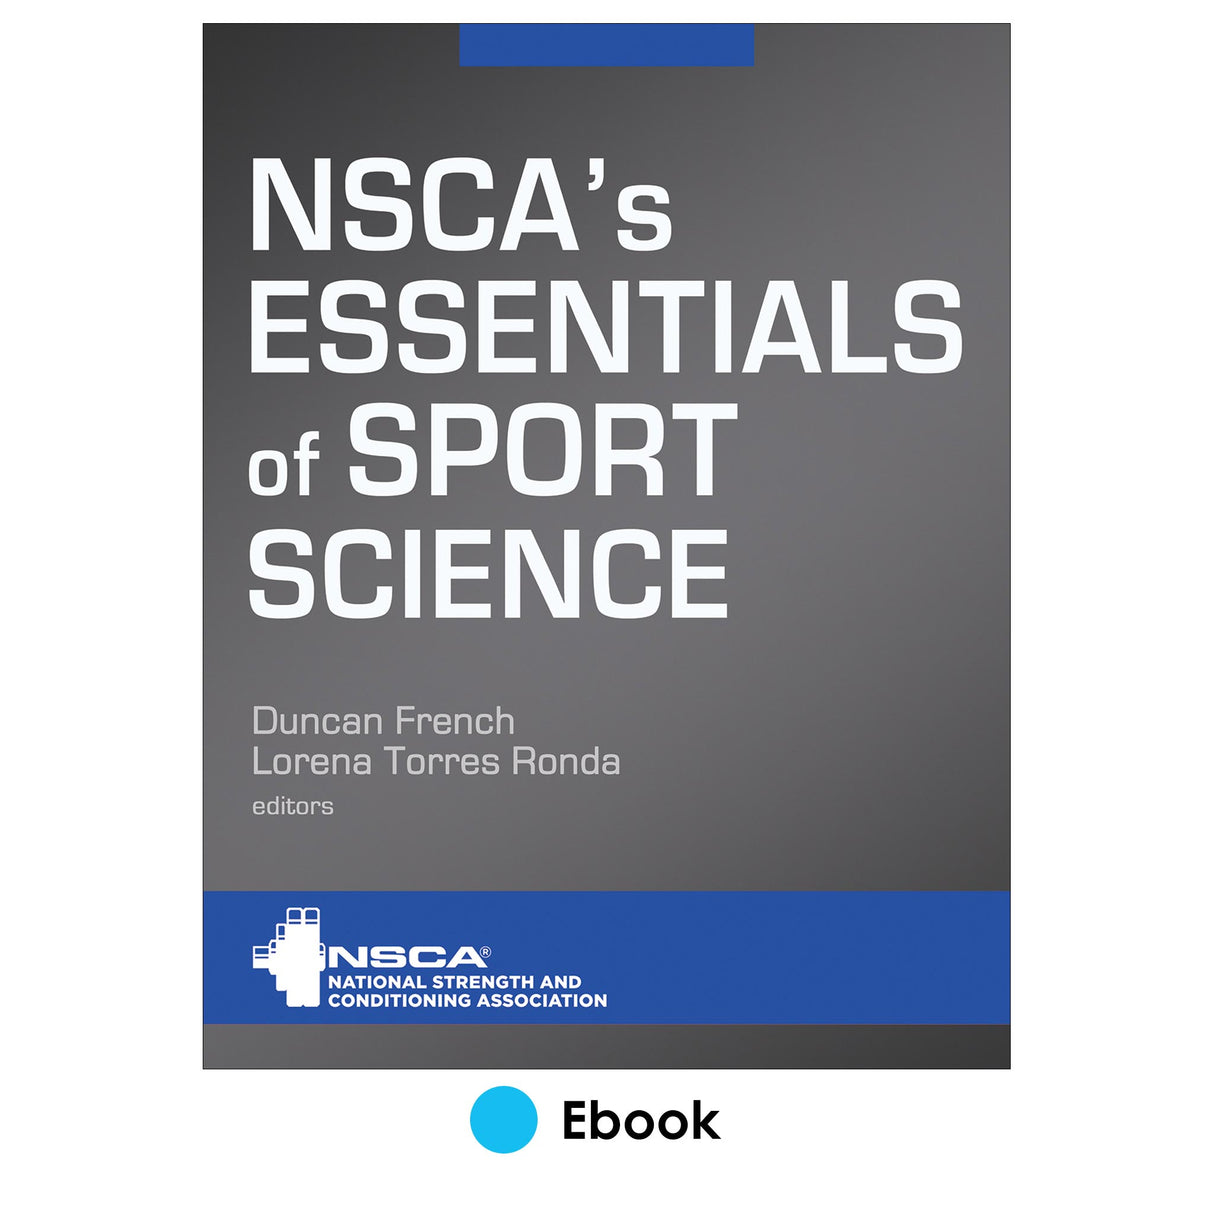 NSCA's Essentials of Sport Science epub